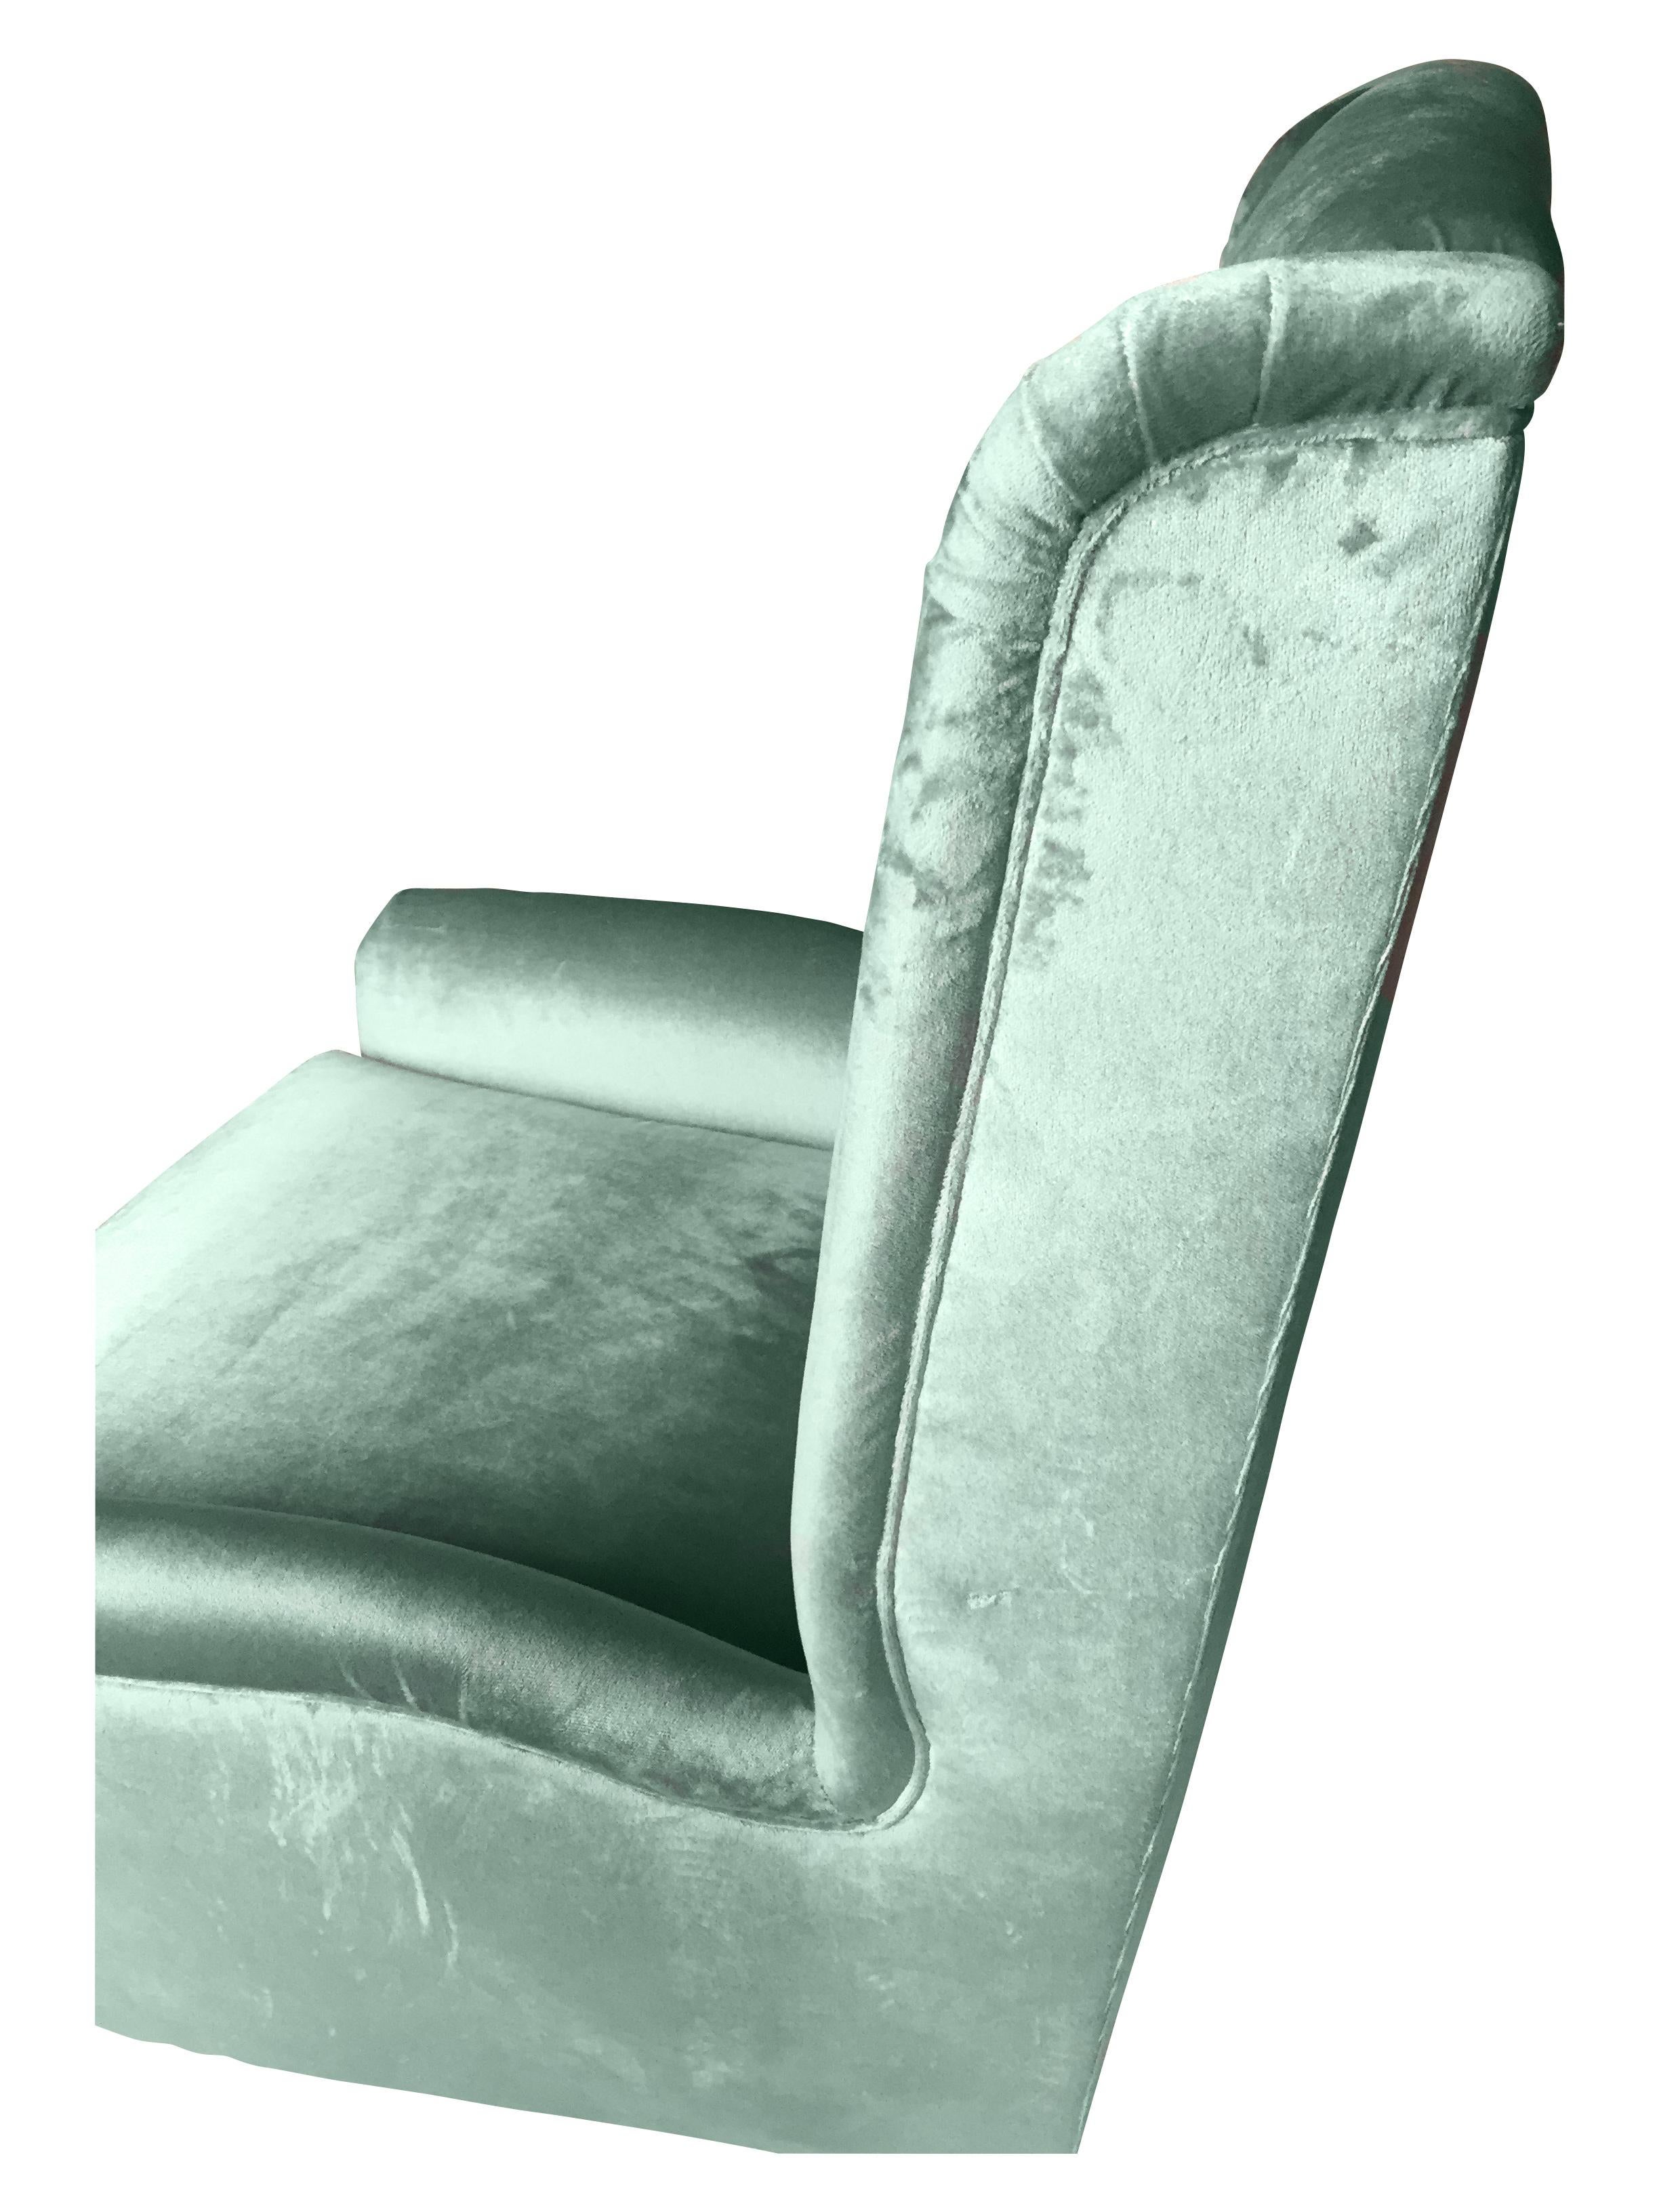 Hand-Crafted Contemporary Italian Gio Ponti Style Teal Aqua Green Velvet High Back Armchair